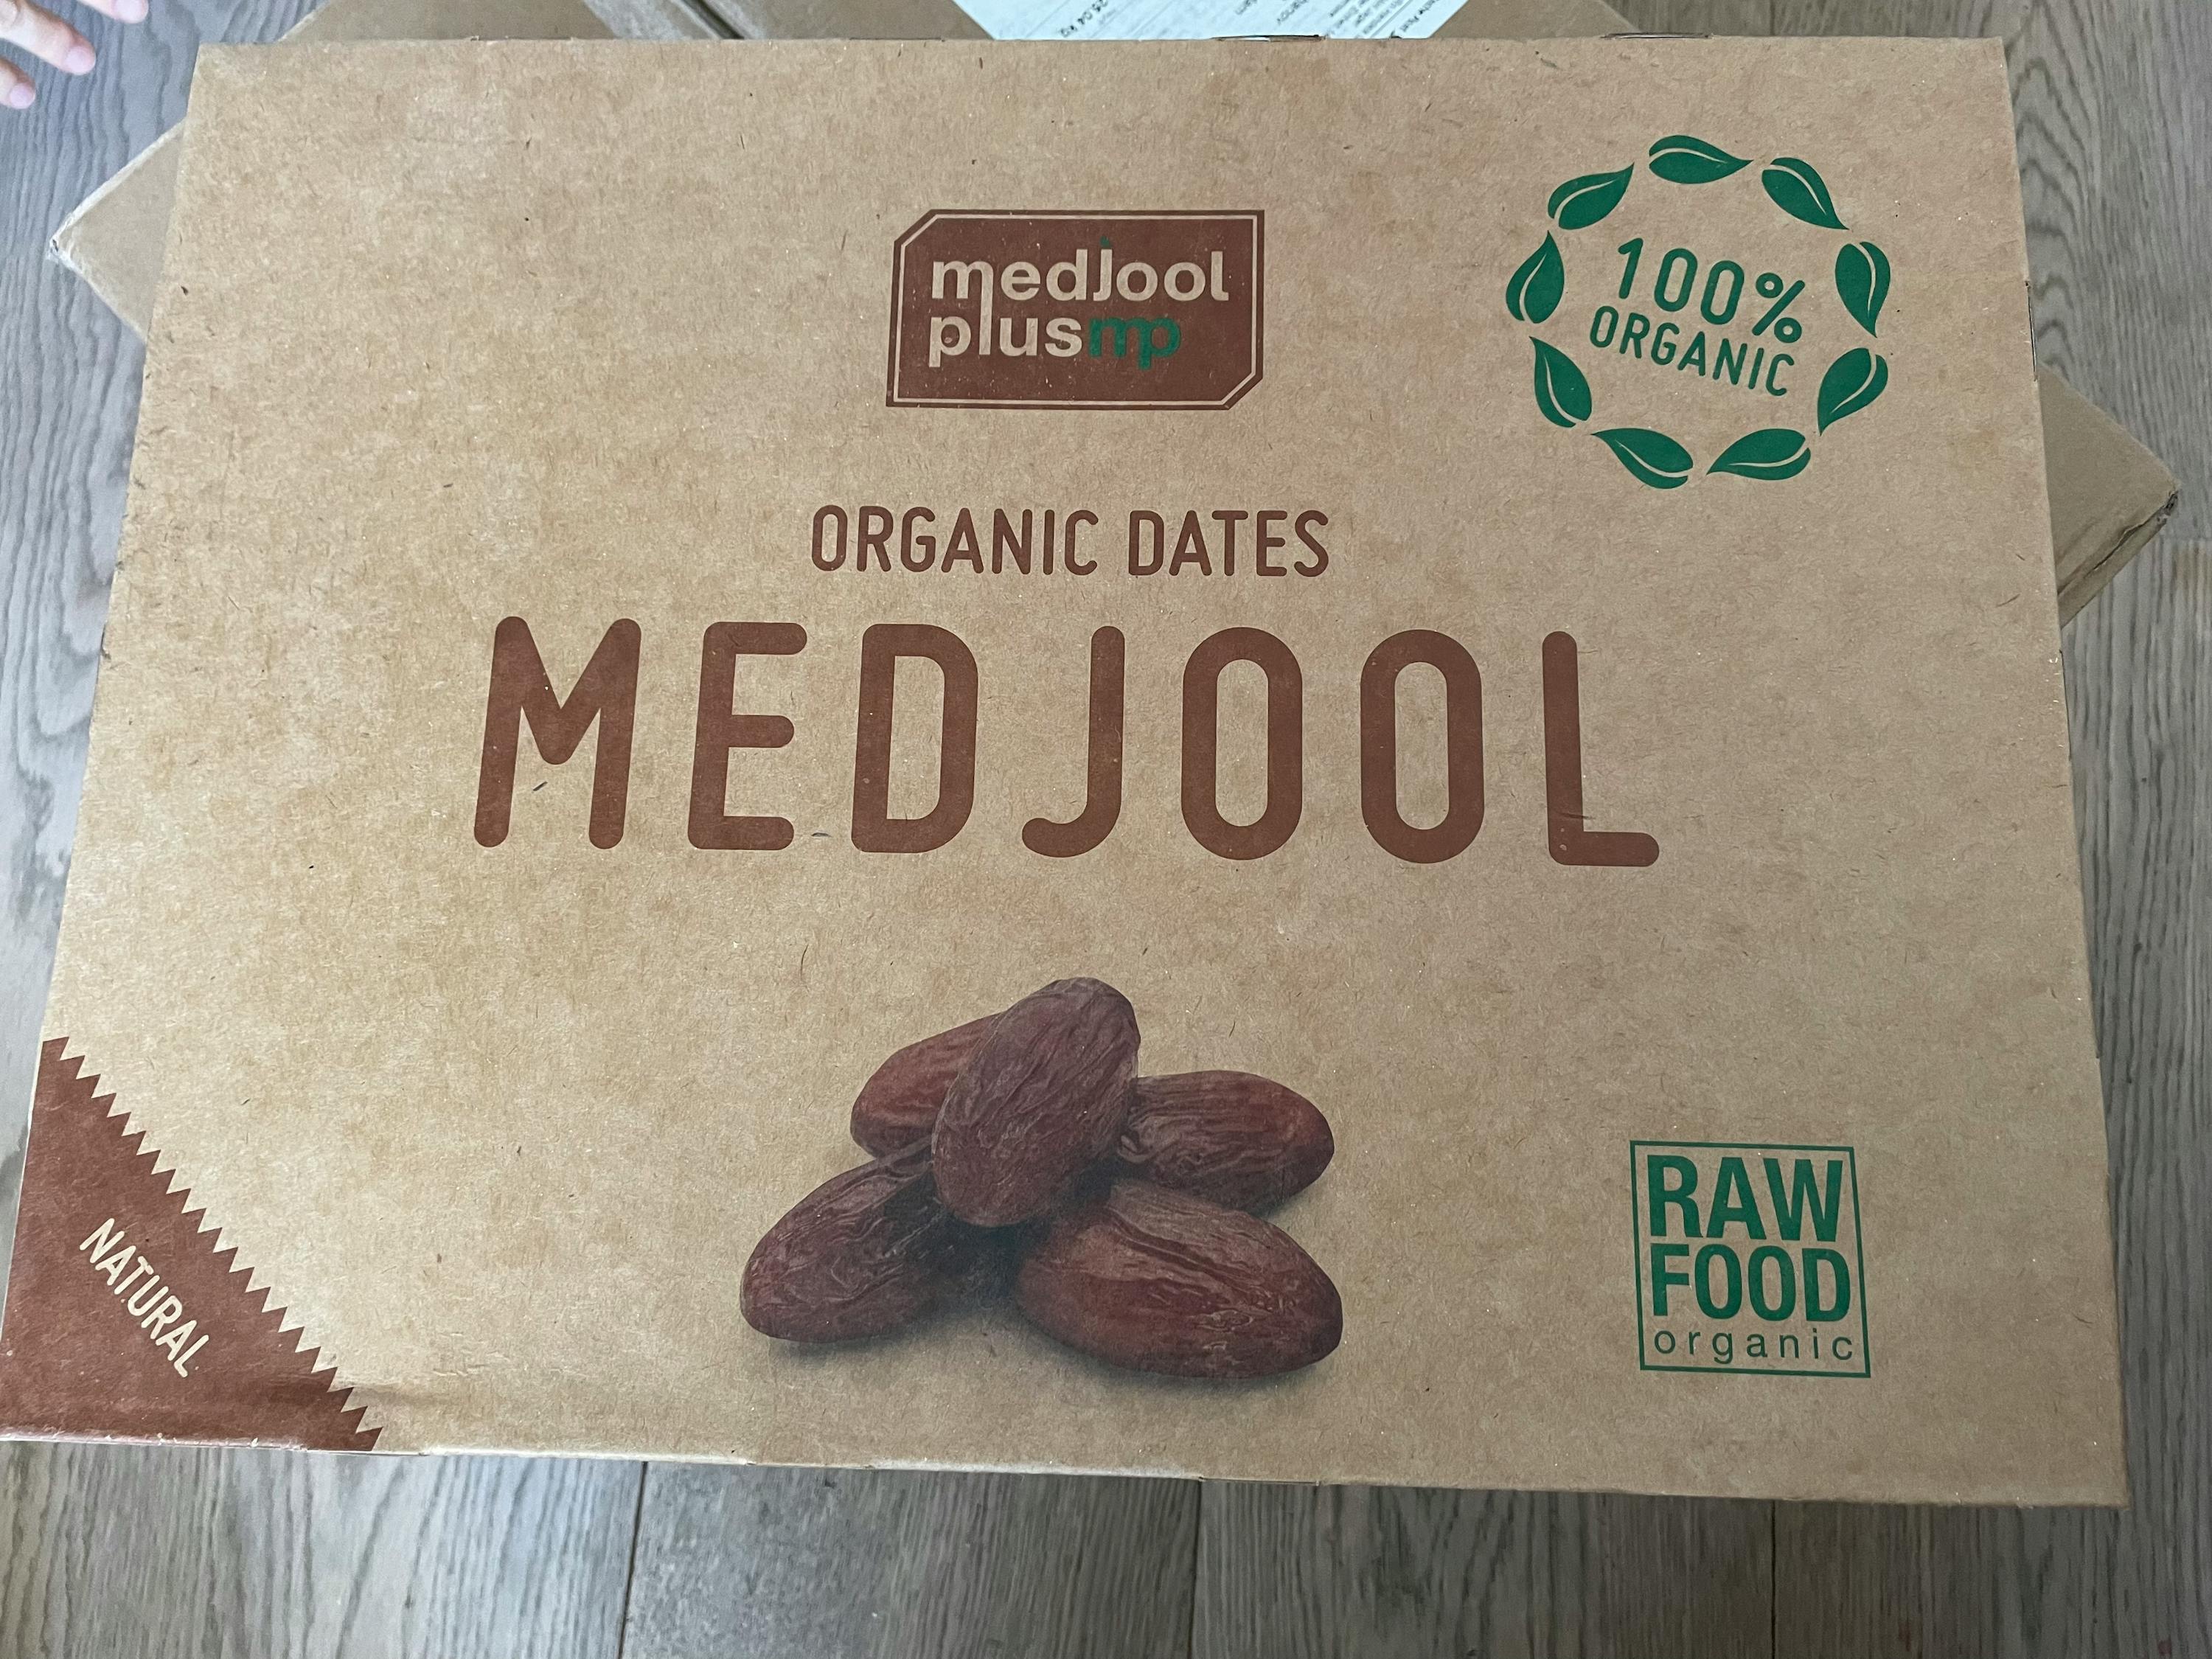 Medjool Premium Dattes Nouvelle Saison - 5 Kg Dattes Medjool/Extra